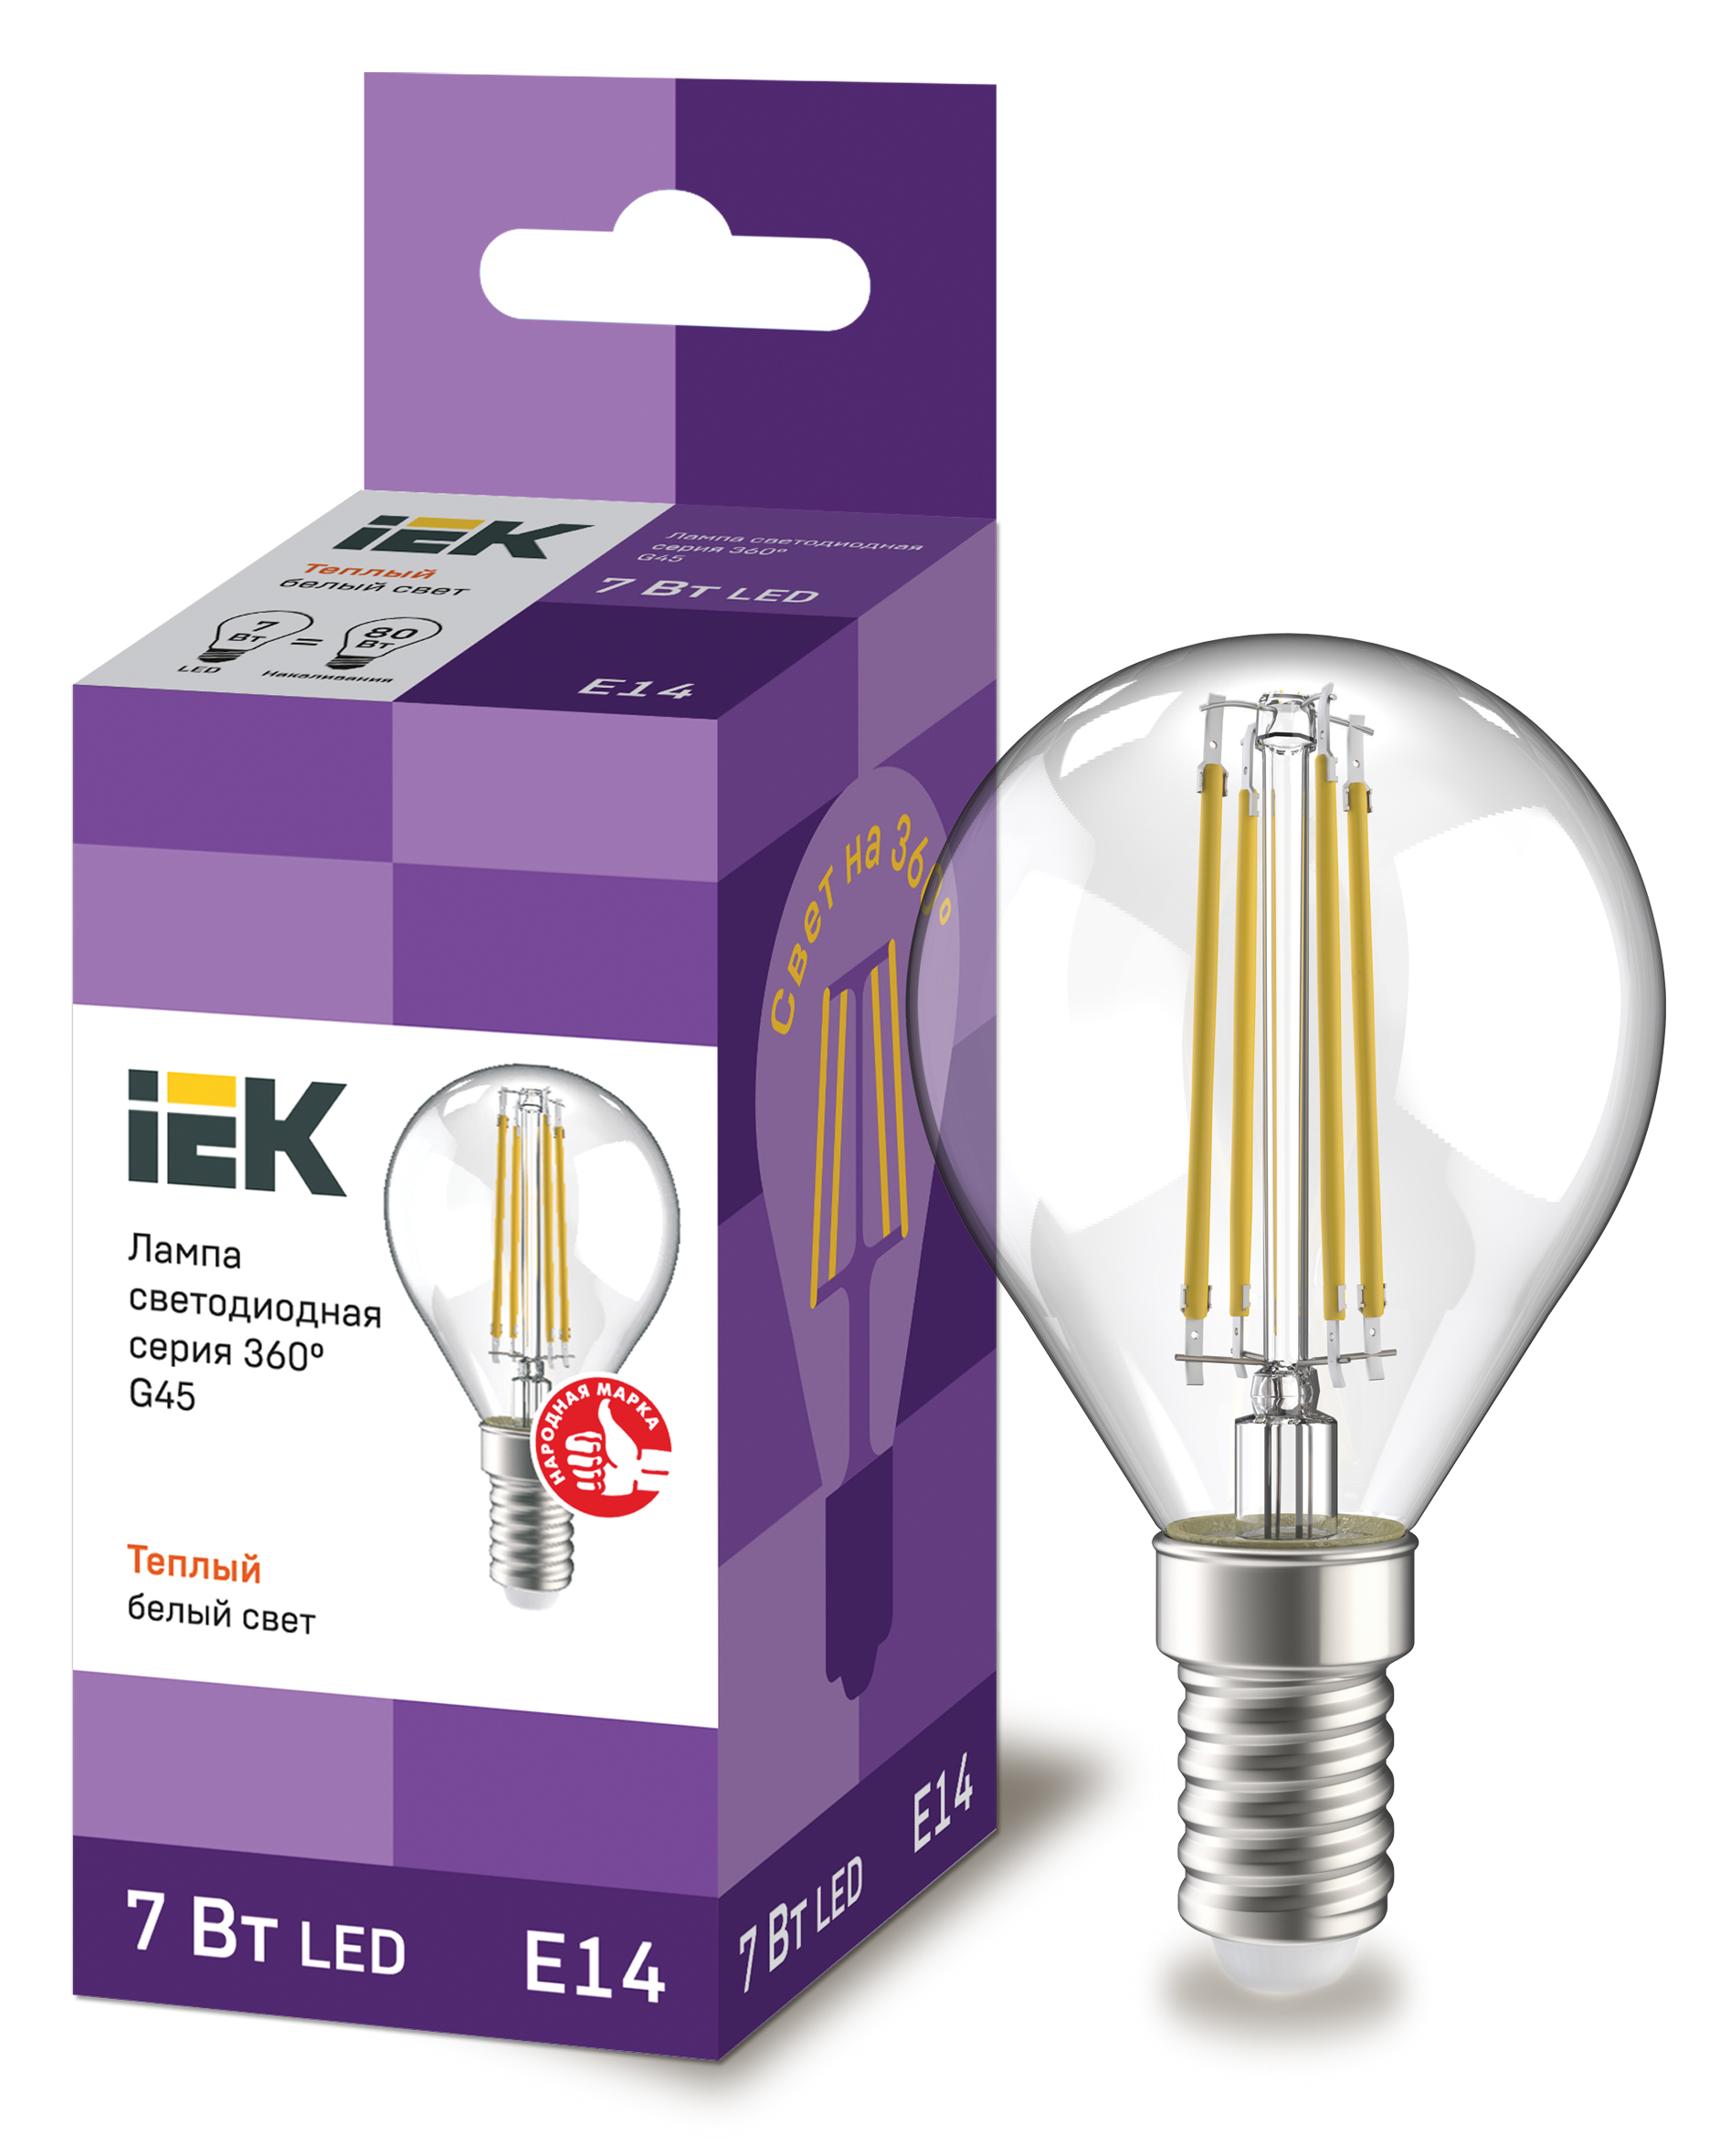 IEK Лампа LED G45 шар прозрачный 7Вт 230В 3000К E14 серия 360°